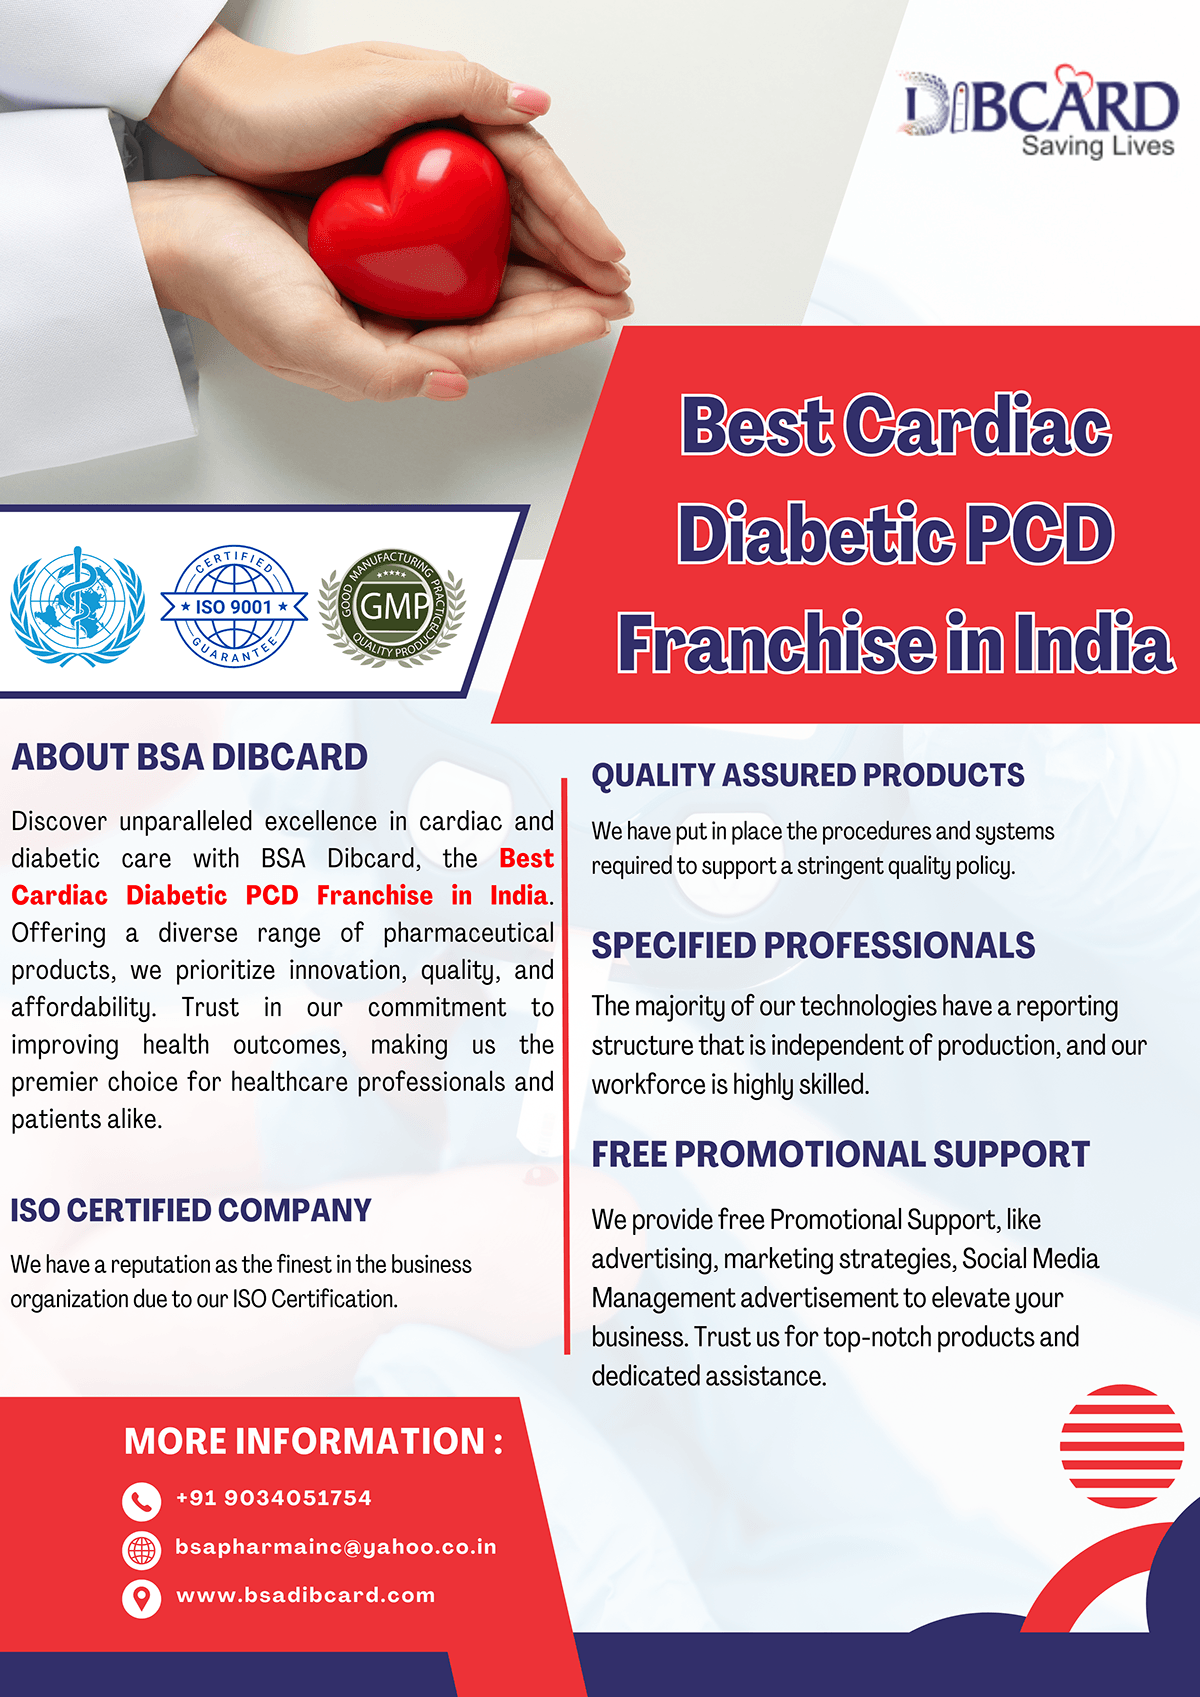 Best Cardiac Diabetic PCD Franchise in India